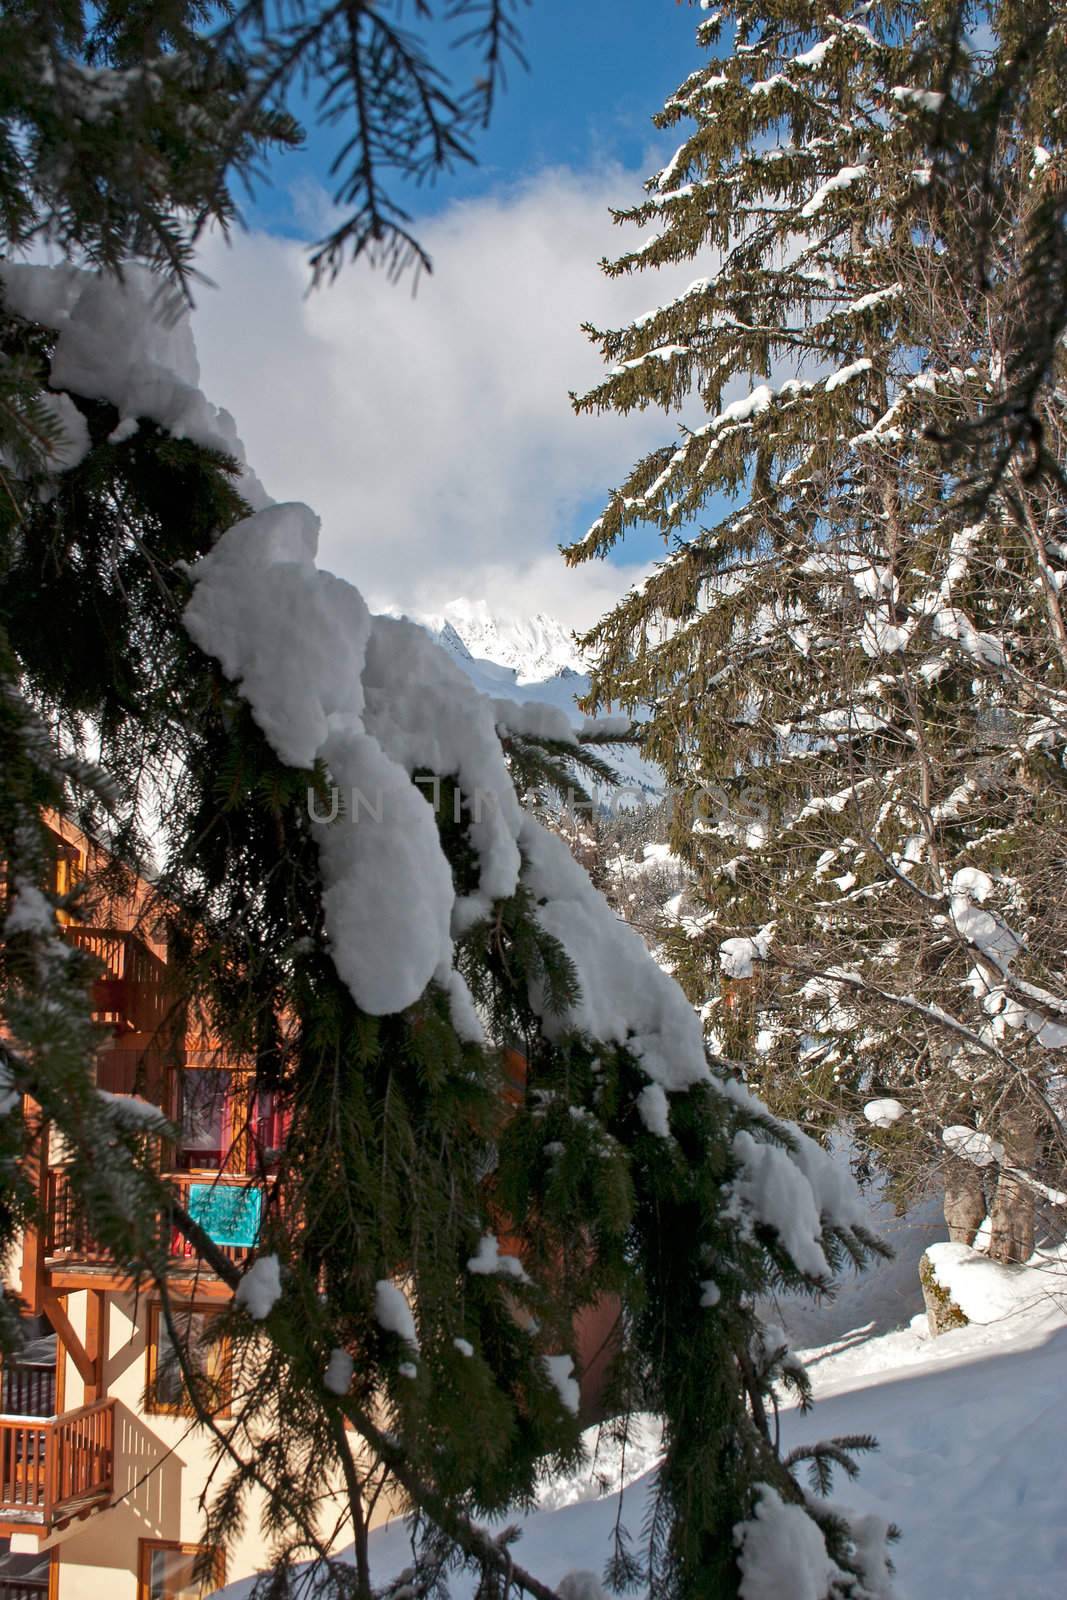 Alps in winter - 6 by Kartouchken